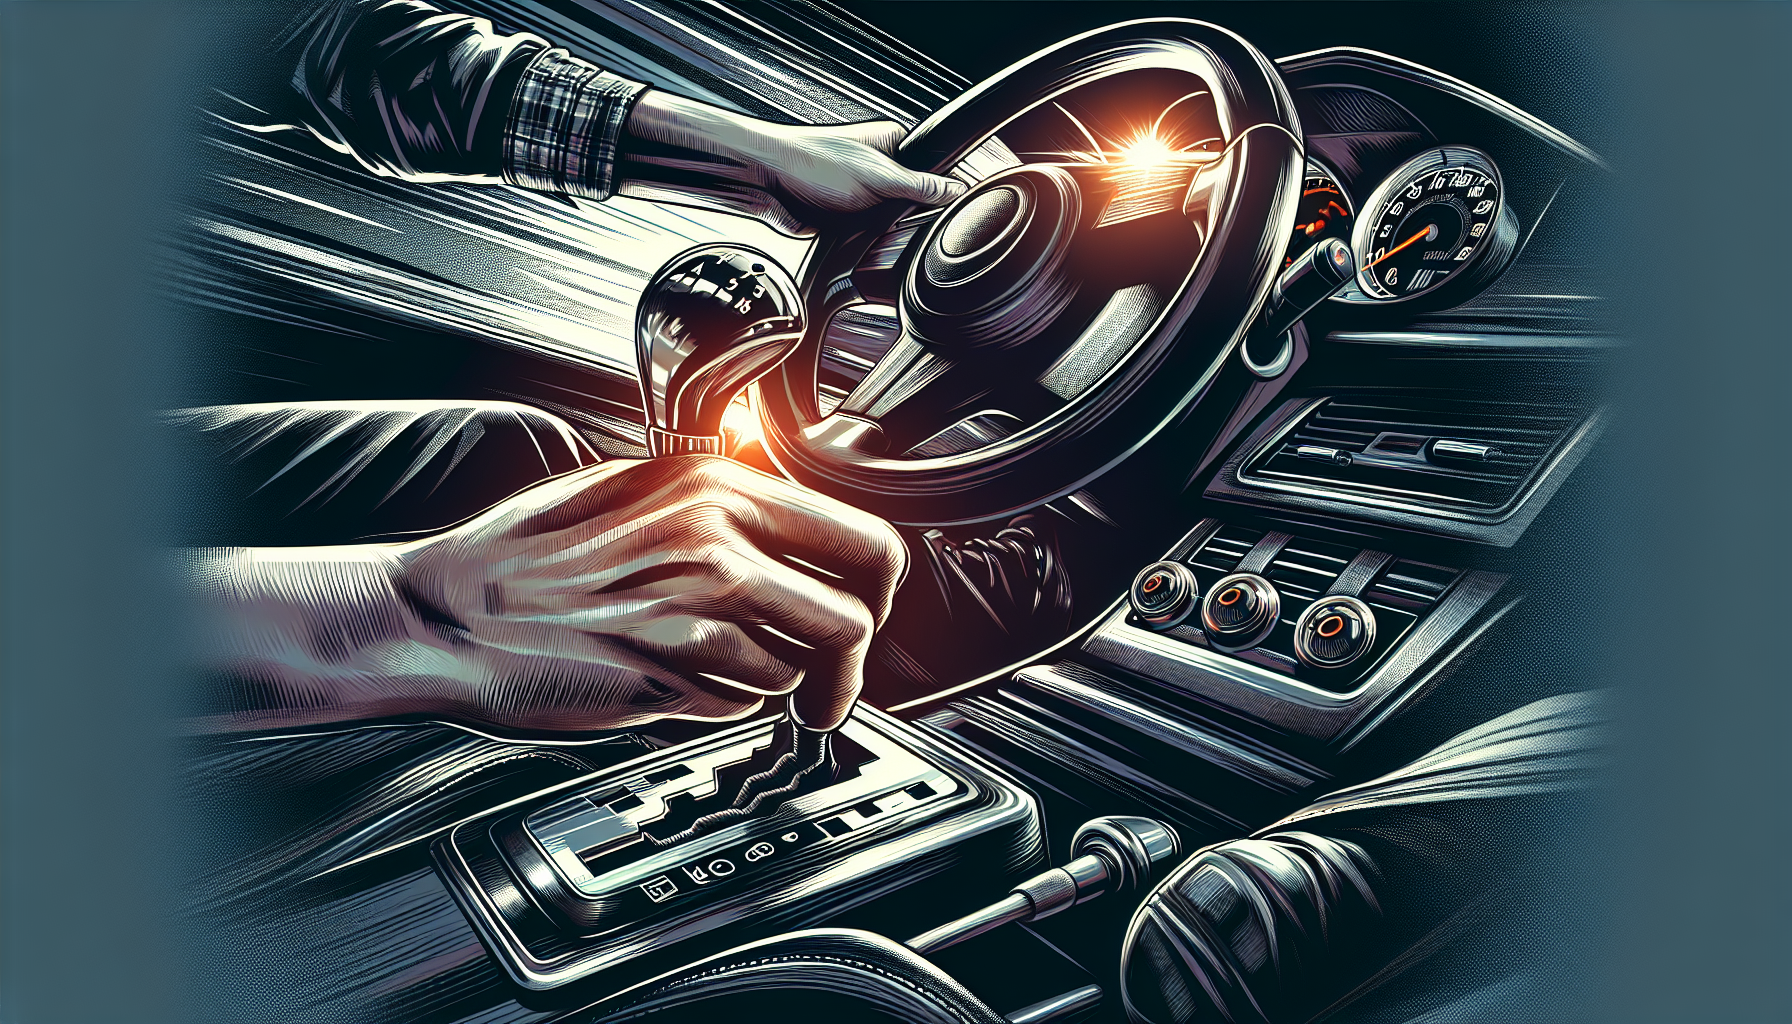 Illustration of manual car control and responsiveness